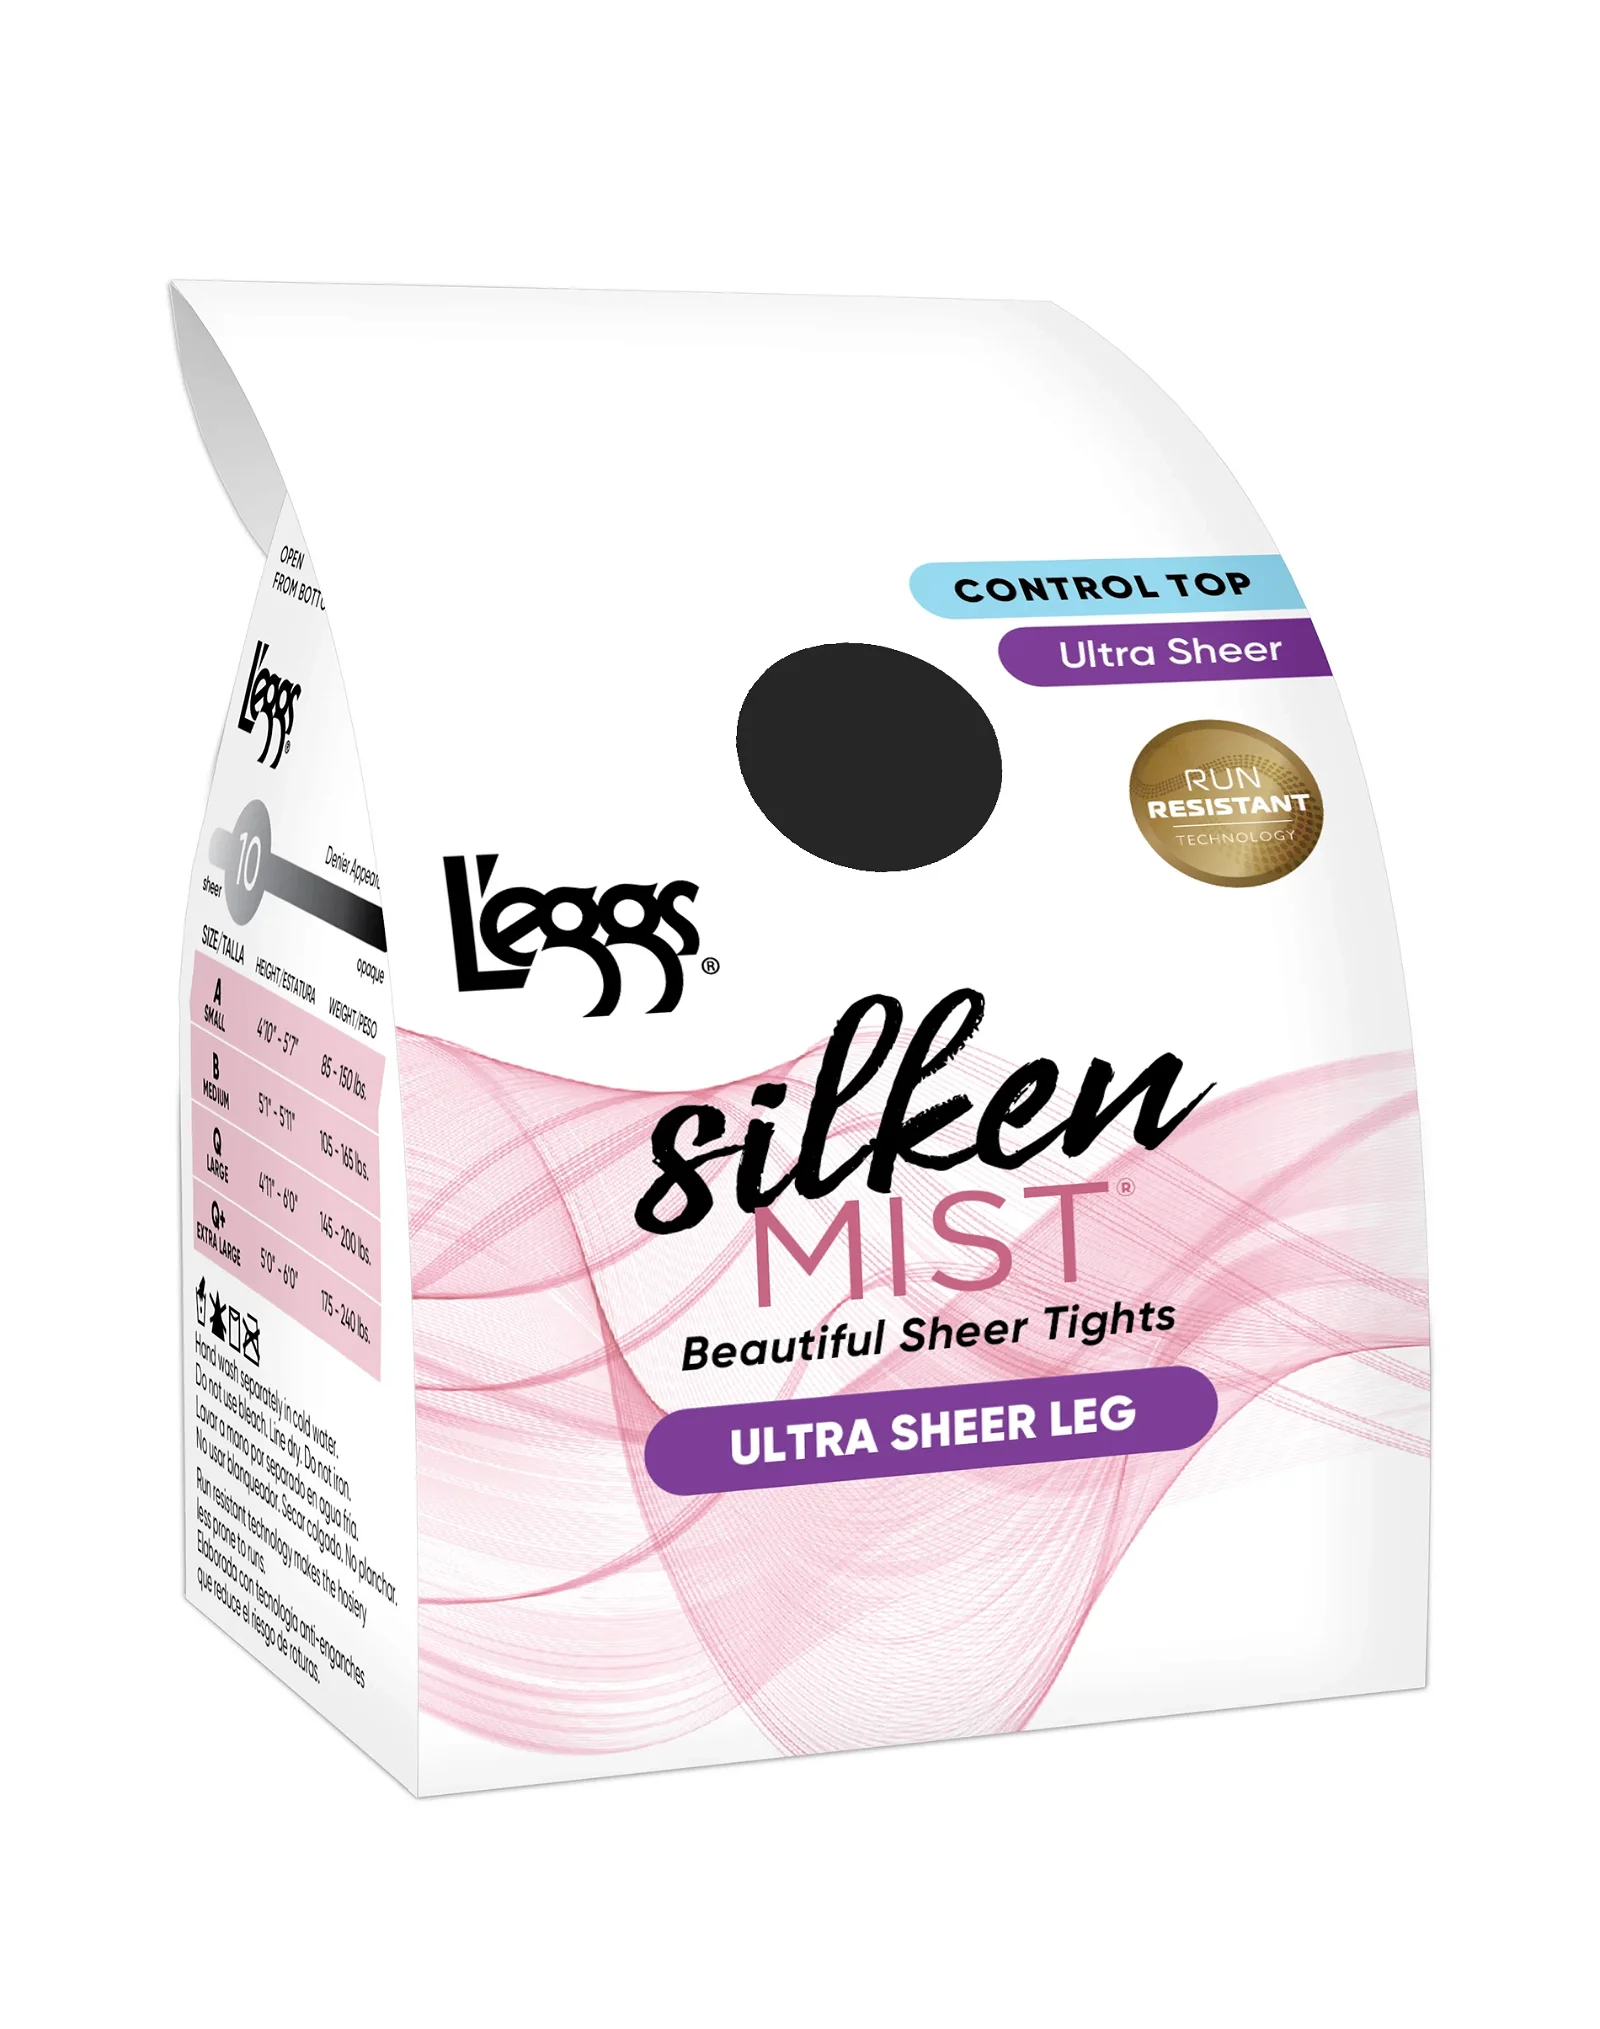 L'eggs Silken Mist Ultra Sheer with Run Resist Technology, Control Top Sheer Toe Pantyhose, 1-Pack